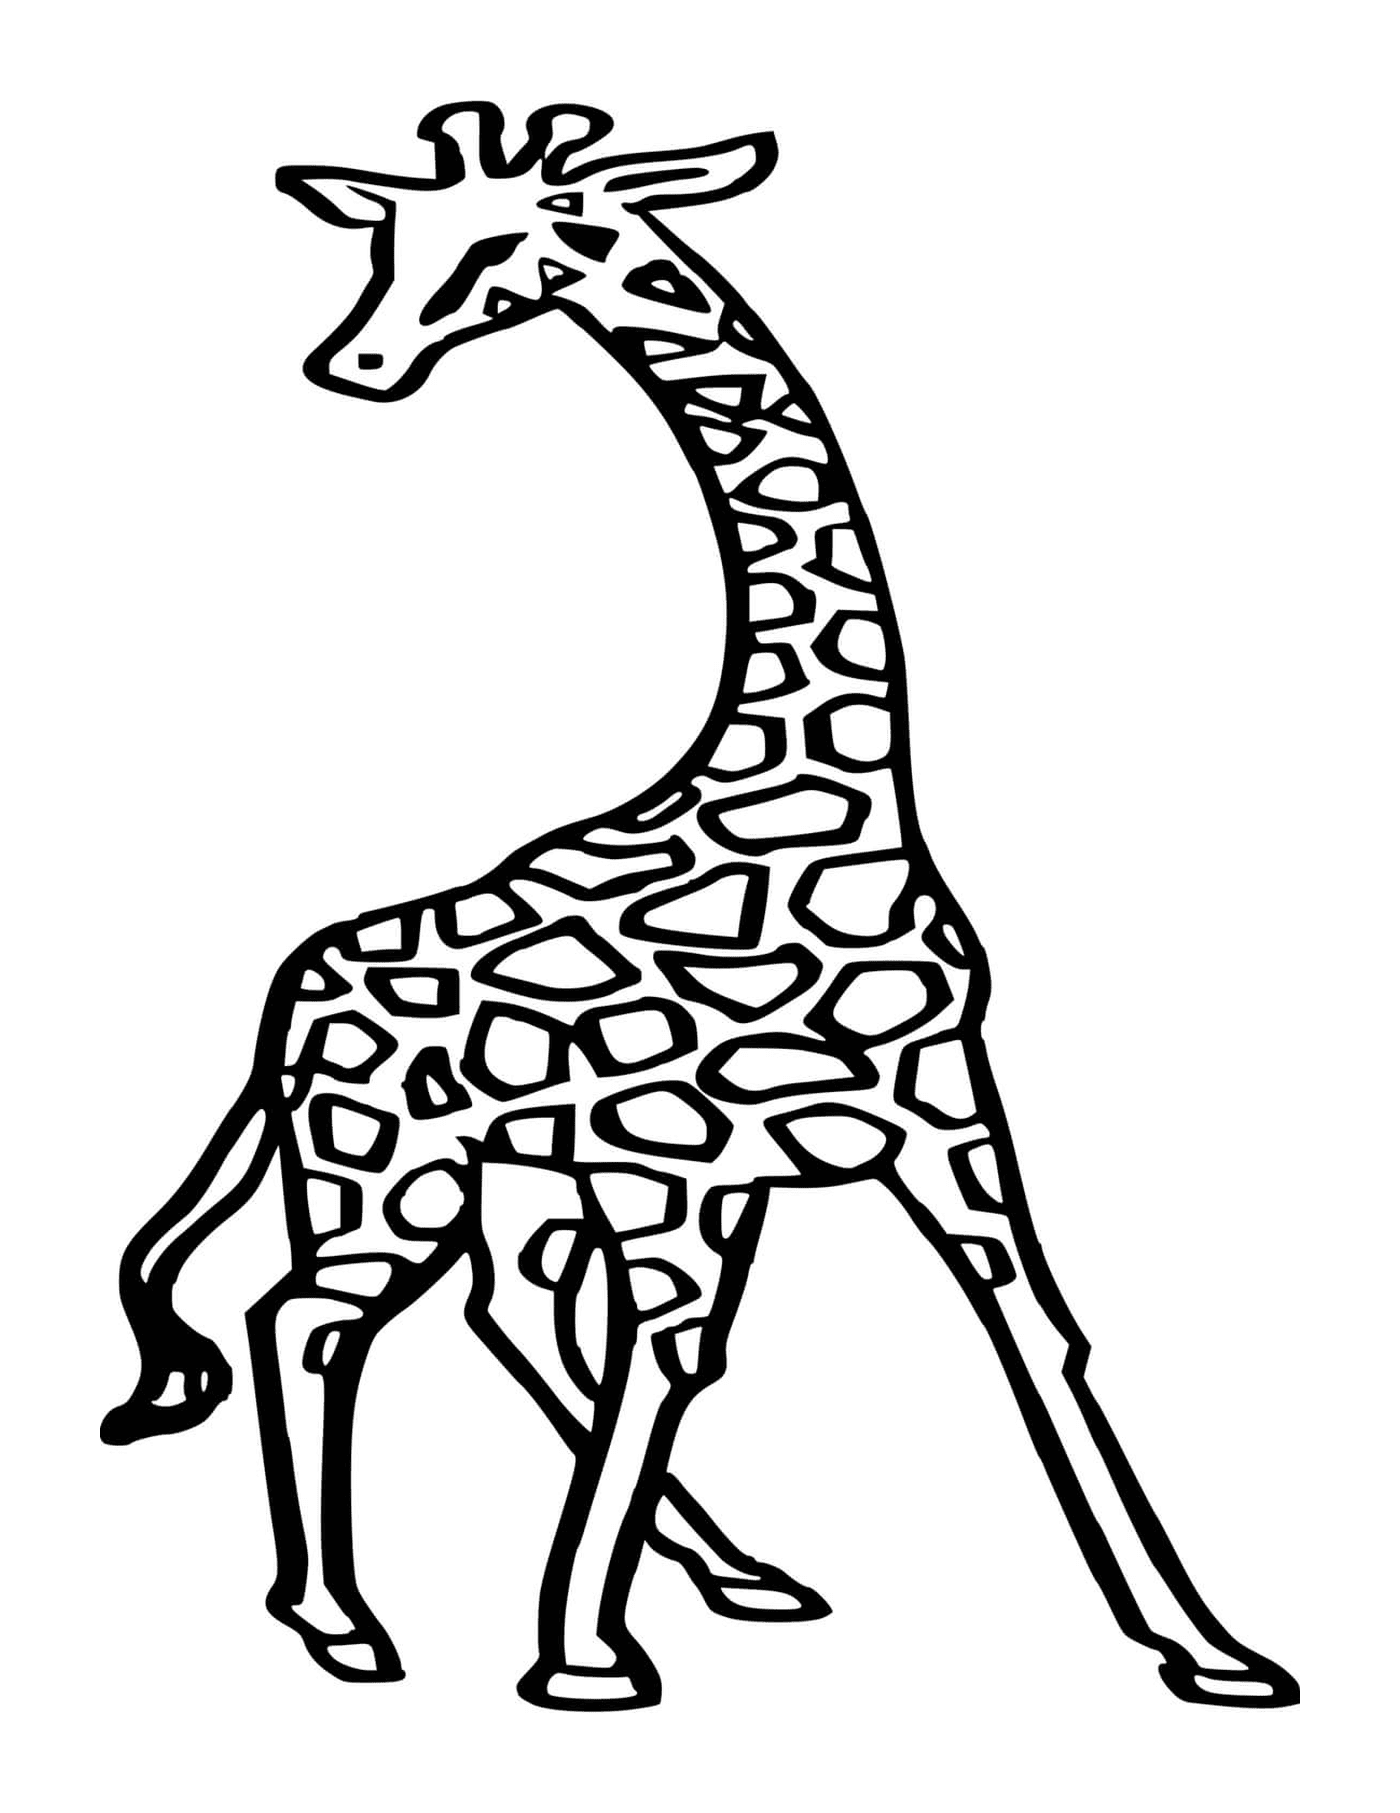  Una bella giraffa 